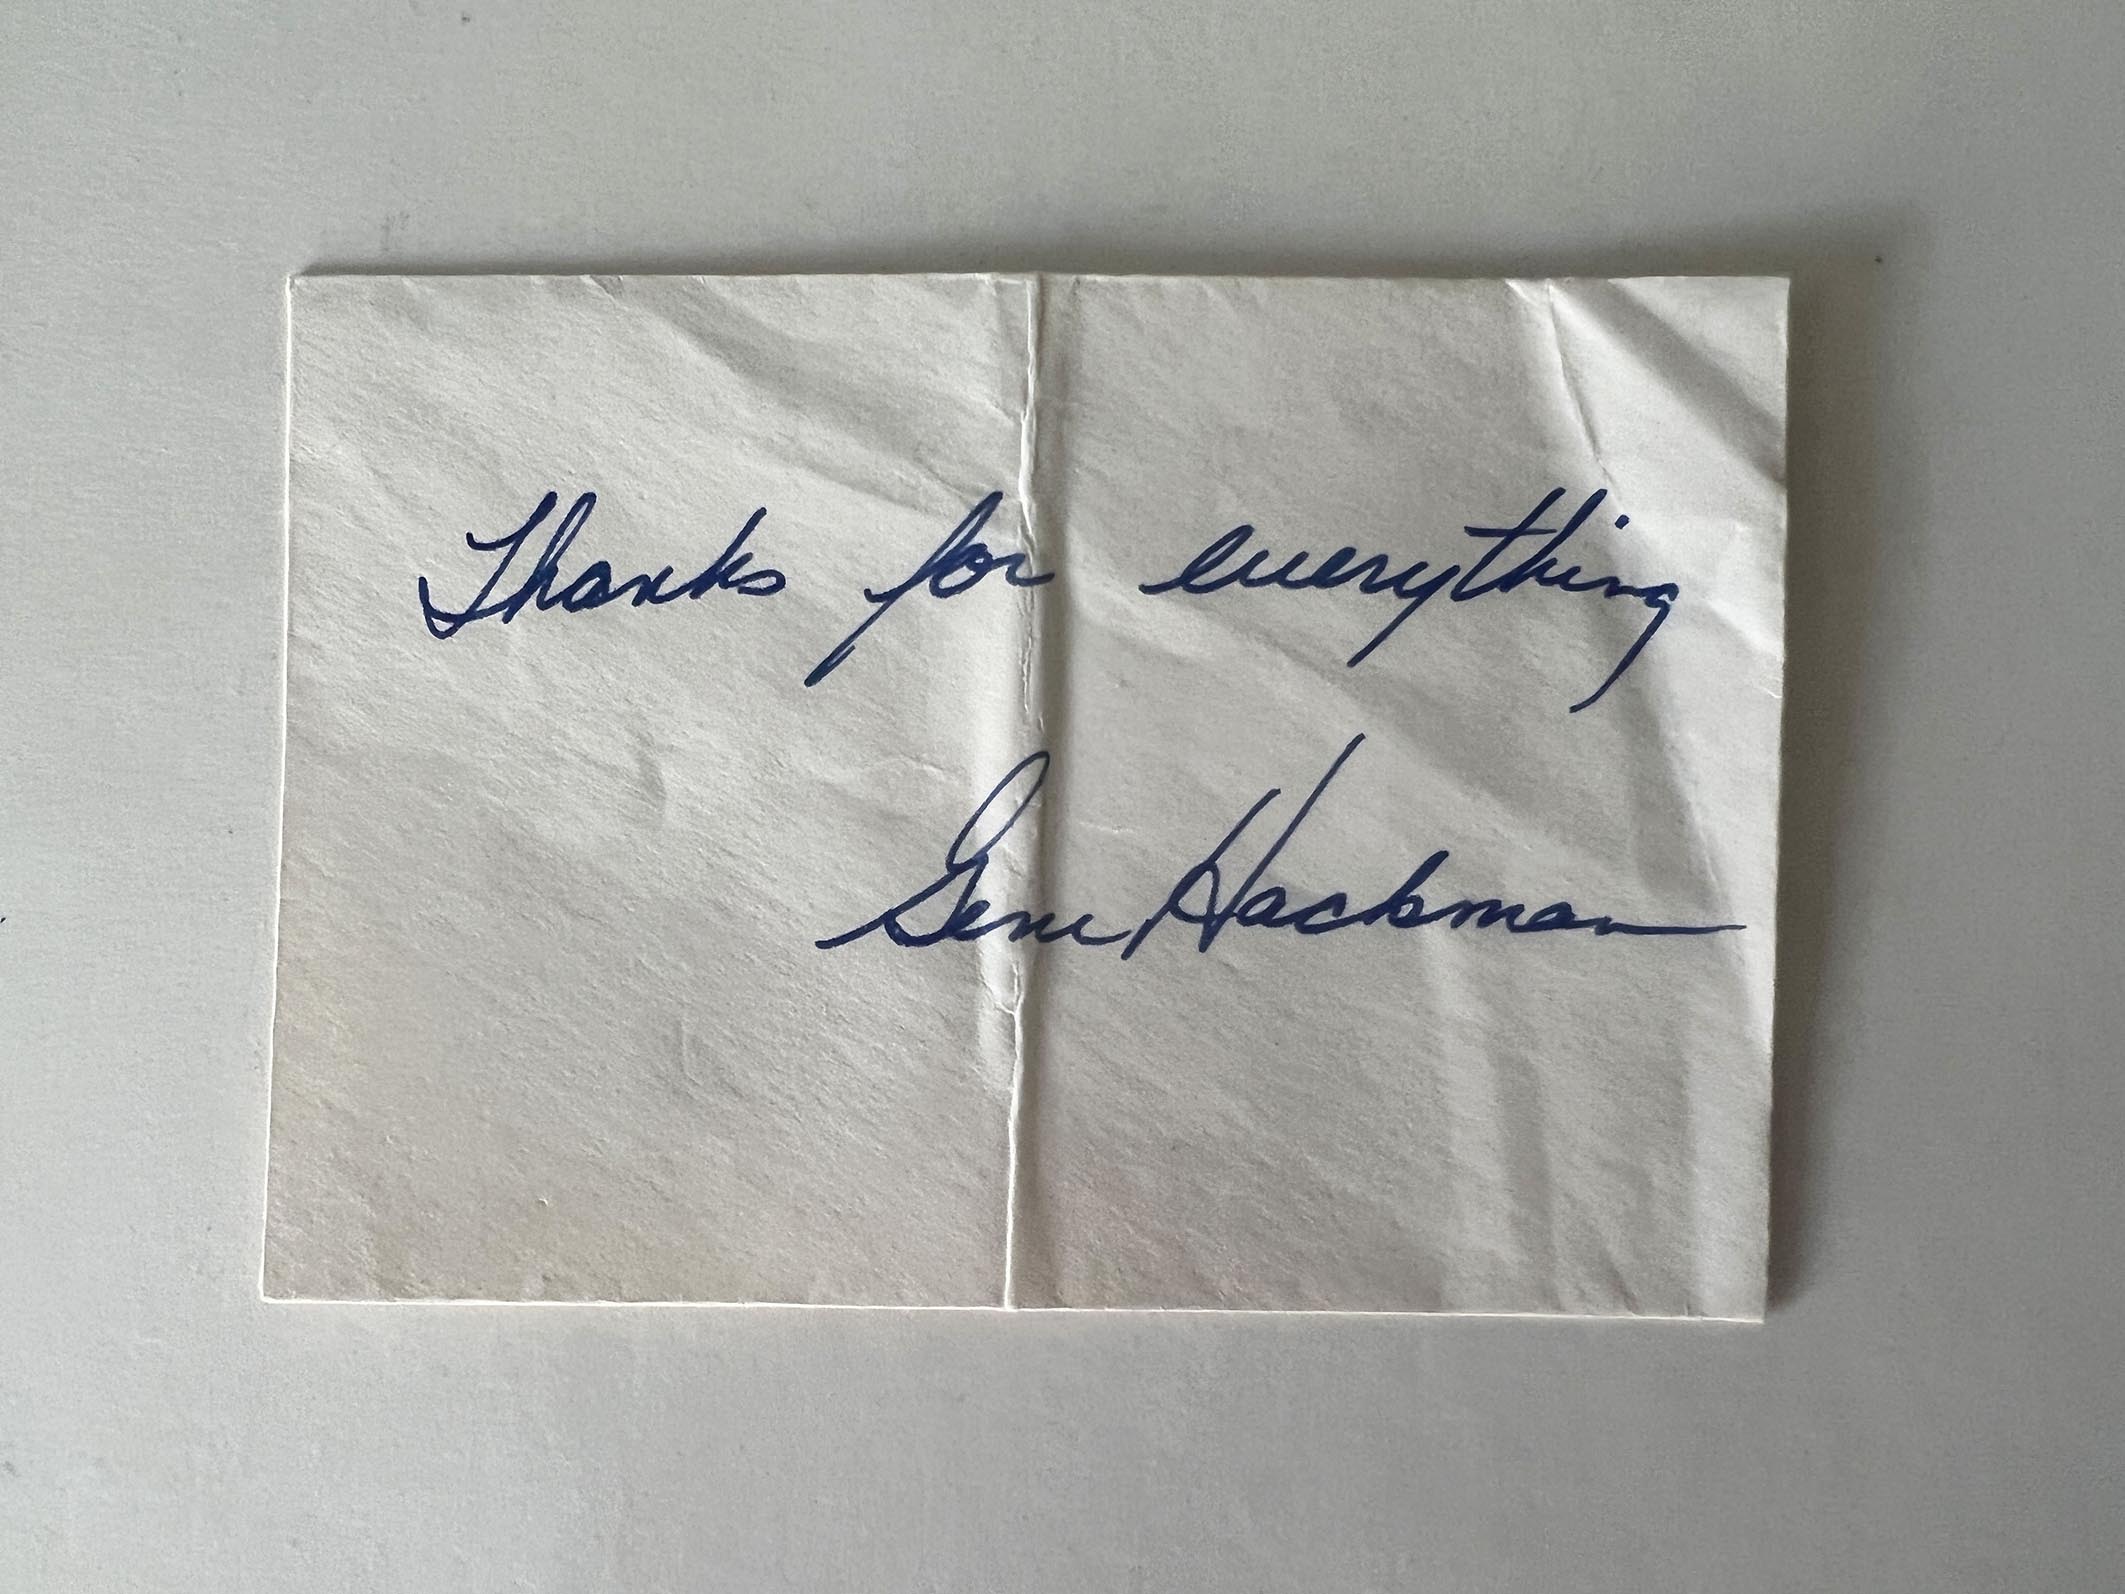 Gene Hackman signed note